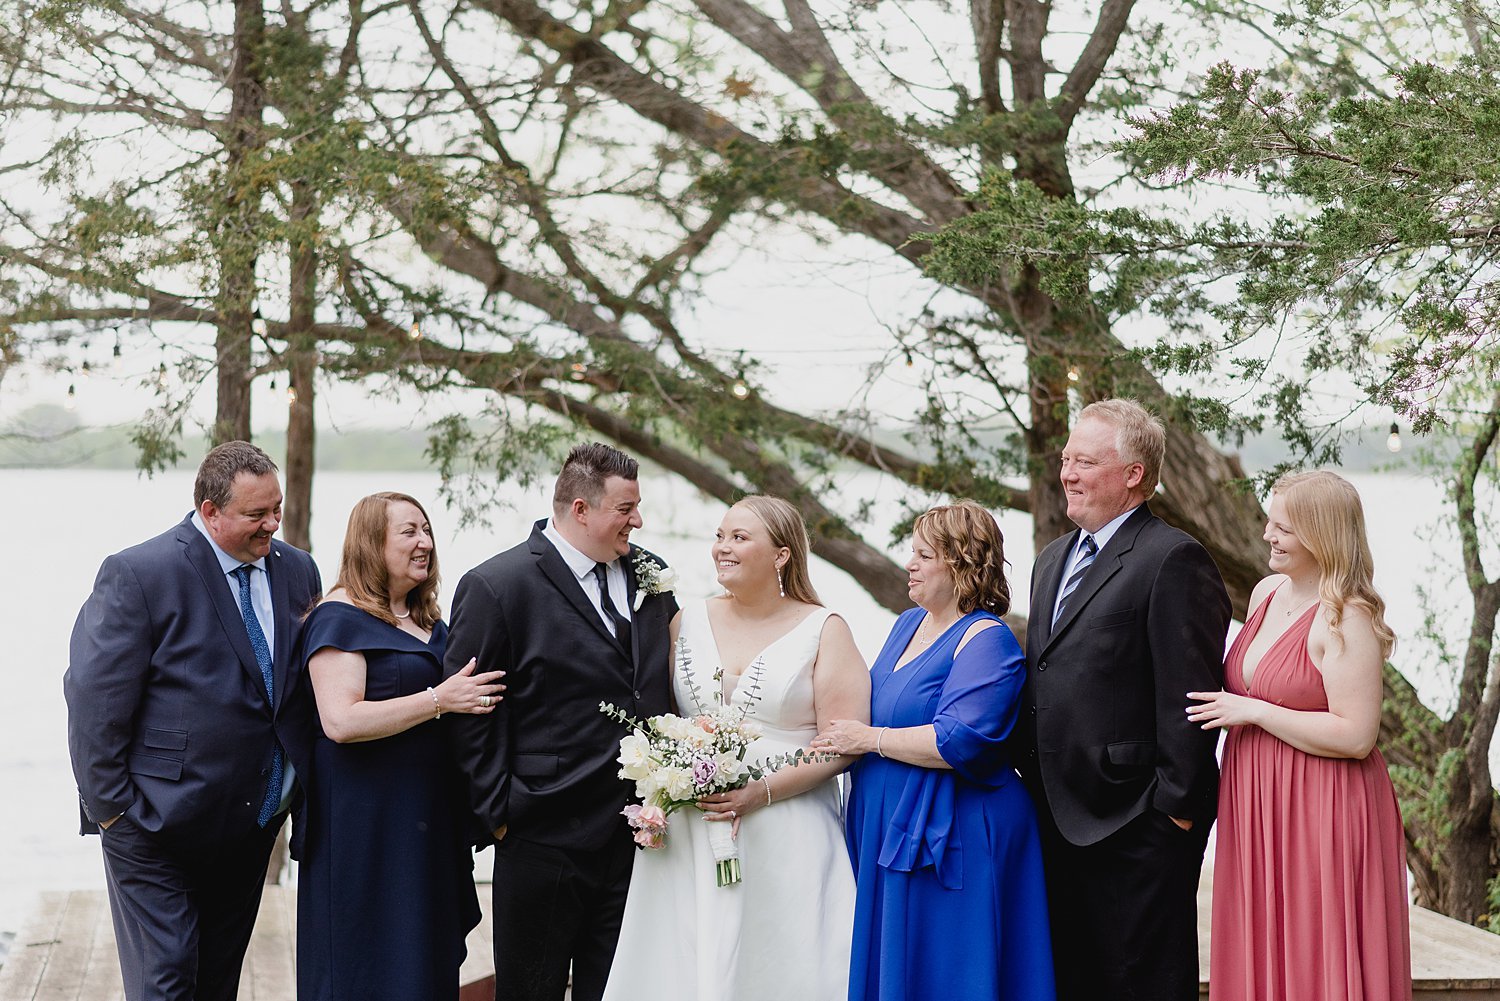 Intimate PEC Micro Wedding | Prince Edward County Wedding Photographer | Holly McMurter Photographs_0098.jpg